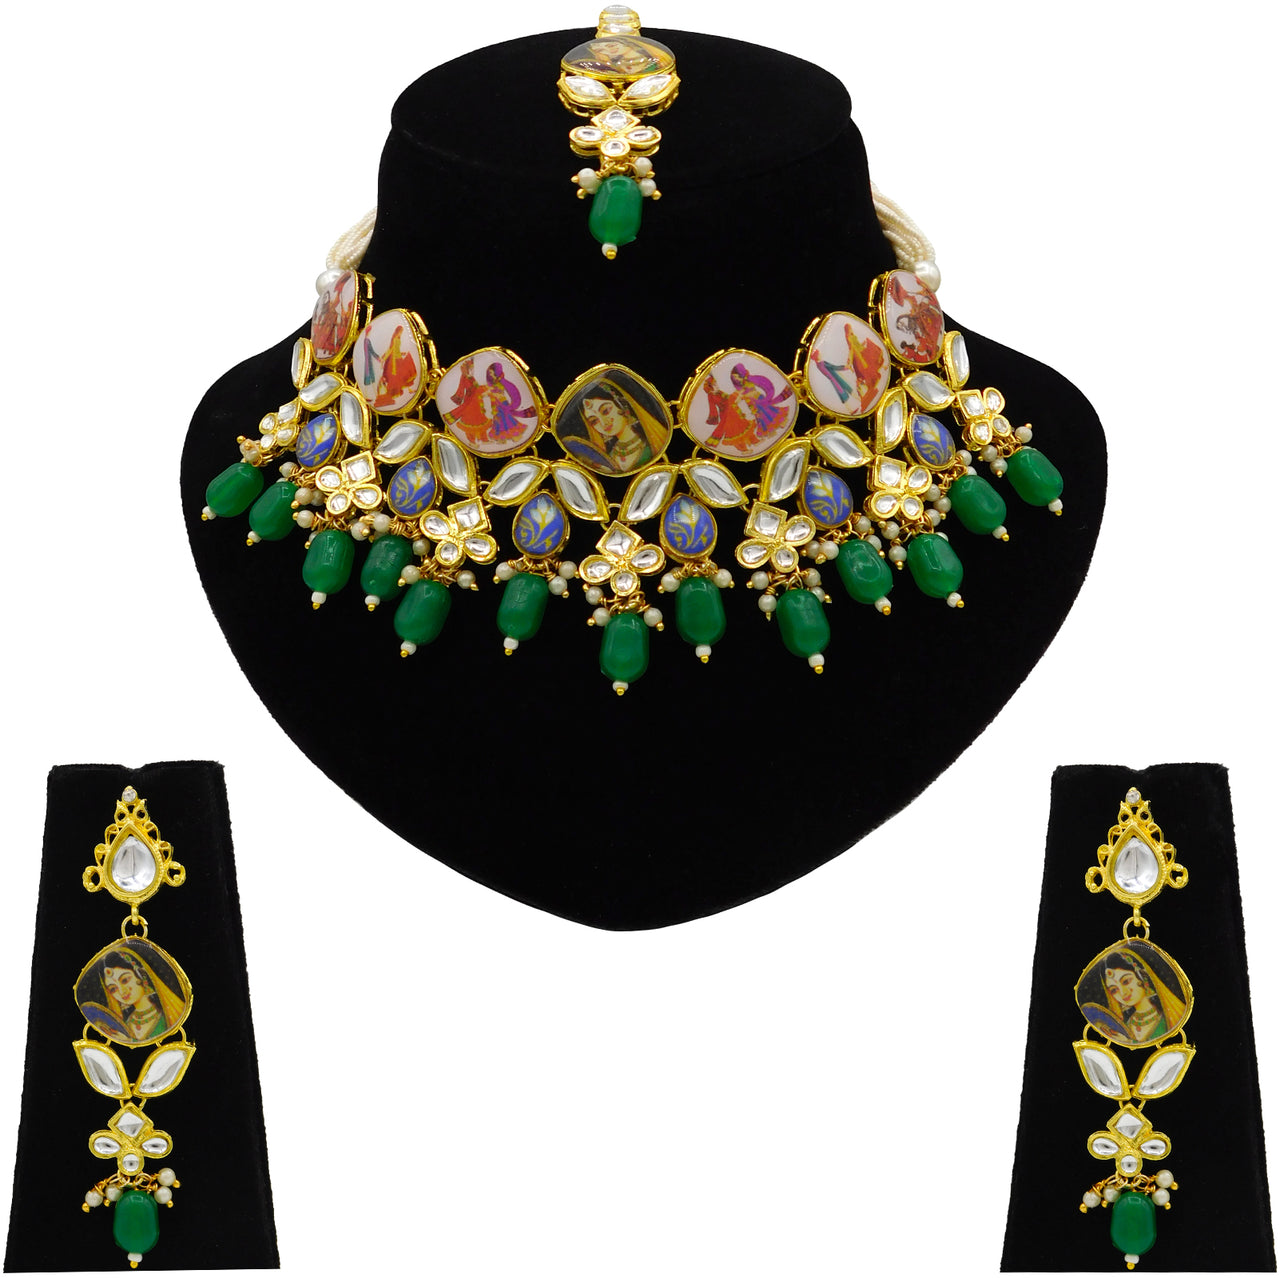 Personalized Sujwel Gold Toned Kundan Stones & Beads Lamination Multistrand Pearl Beads Choker Necklace Set For Women (SUJP01) - Sujwel